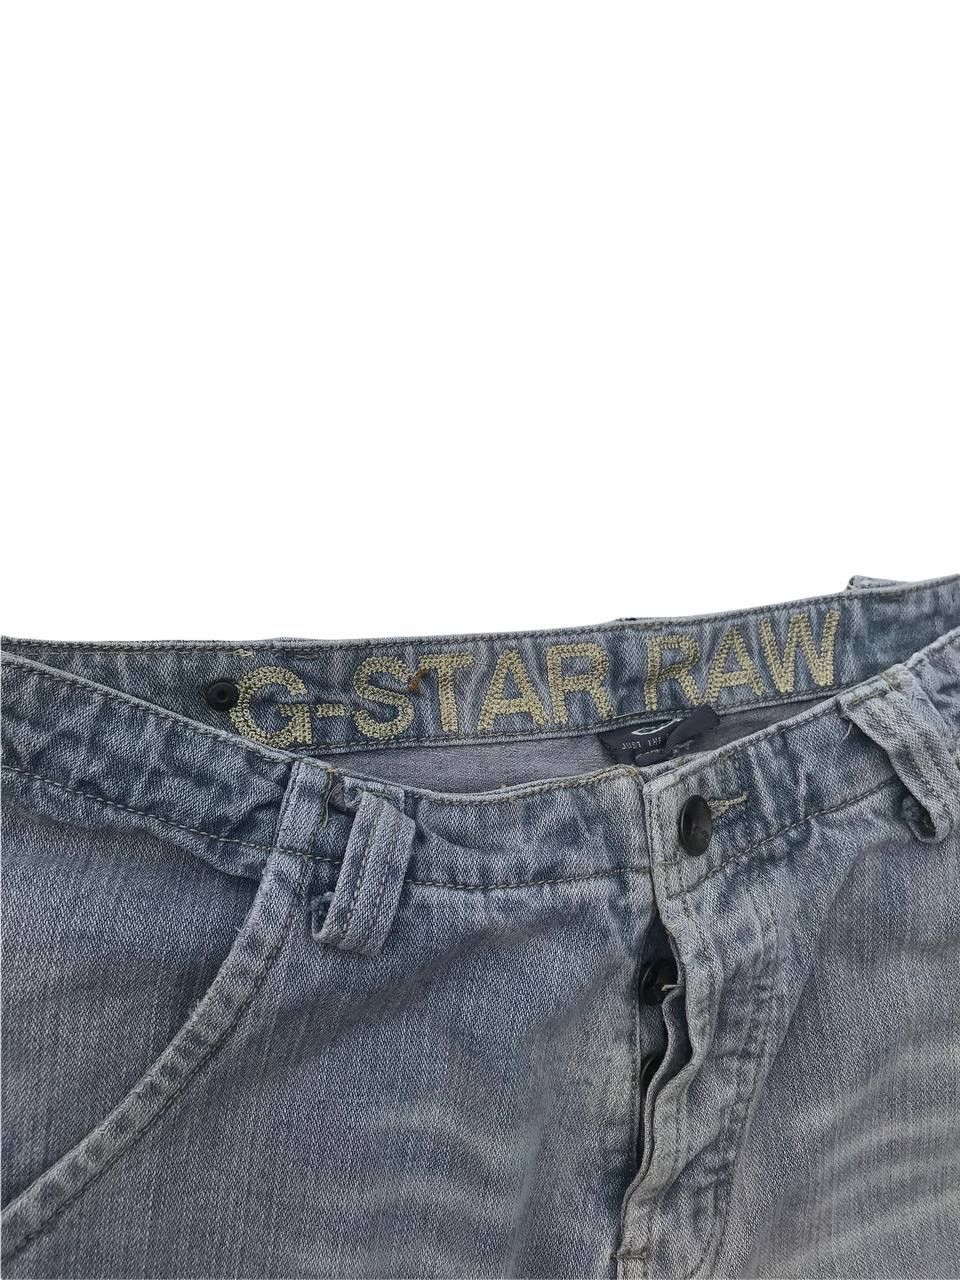 Gstar Gstar Denim Cargo Multipocket Streetwear Fashion Pants Size US 31 - 4 Thumbnail